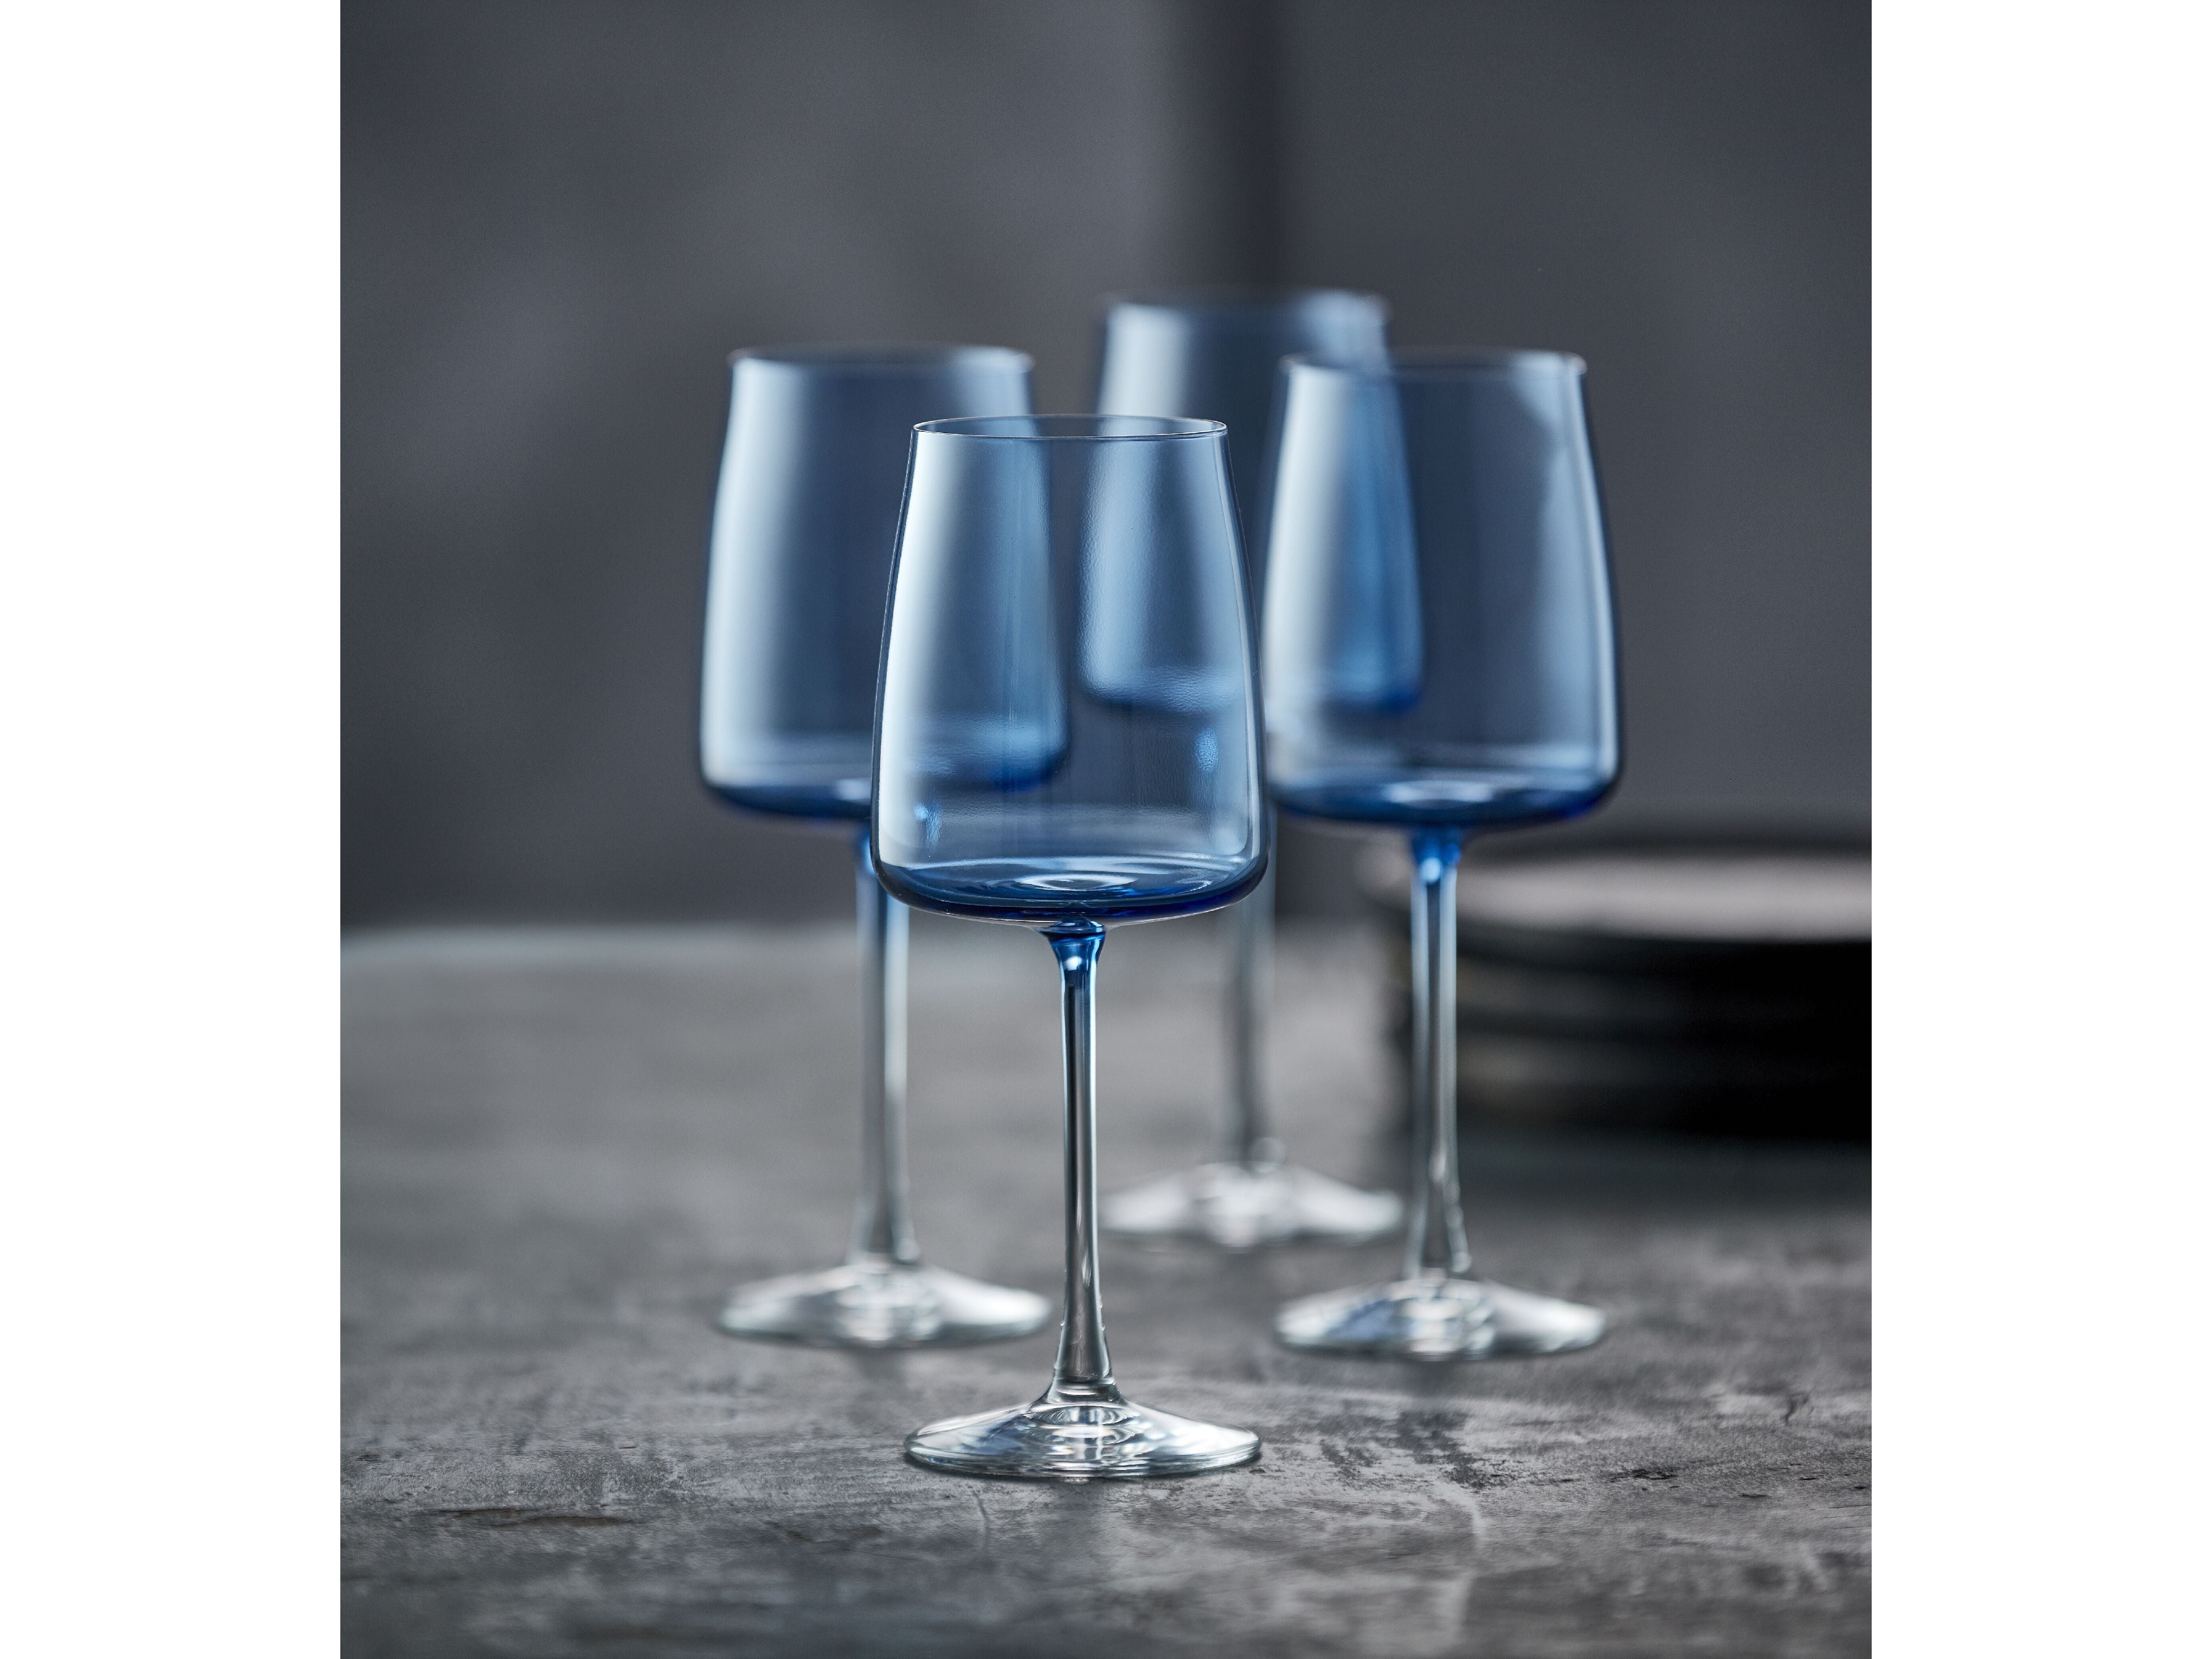 Lyngby Glas Krystal Zero Verre à vin blanc 43 cl 4 pièces, bleu